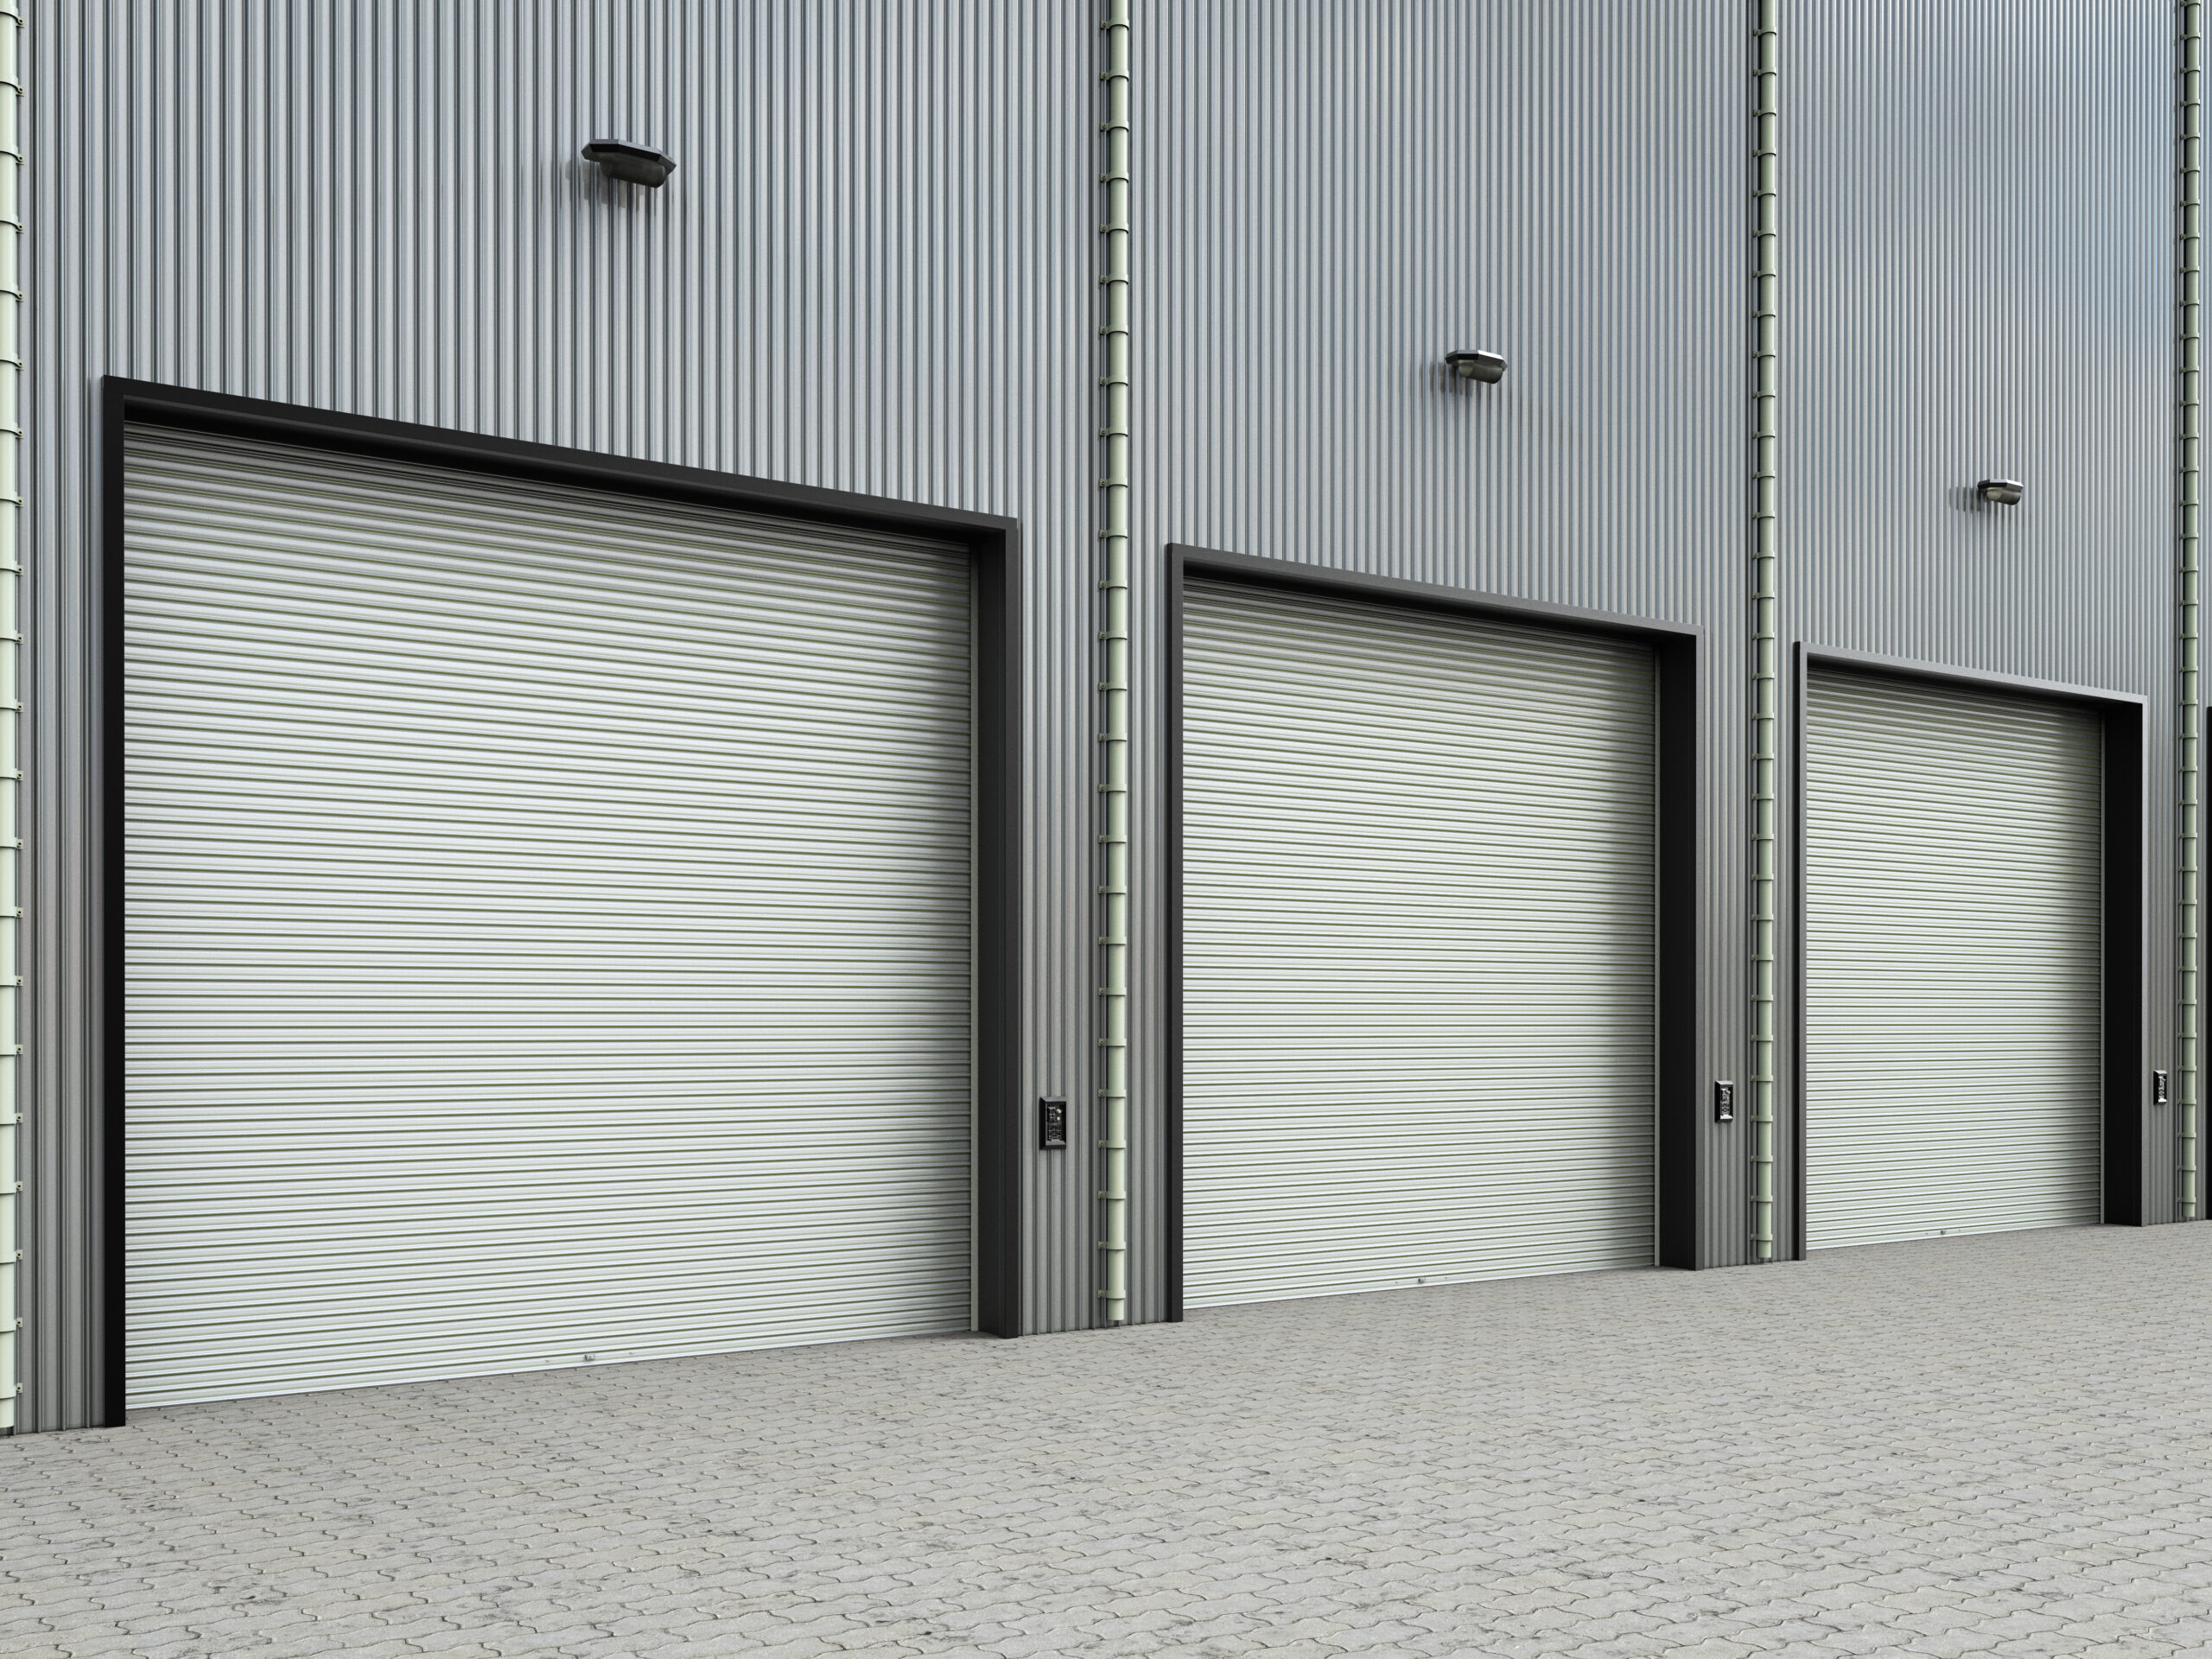 warehouse exterior with shutter doors